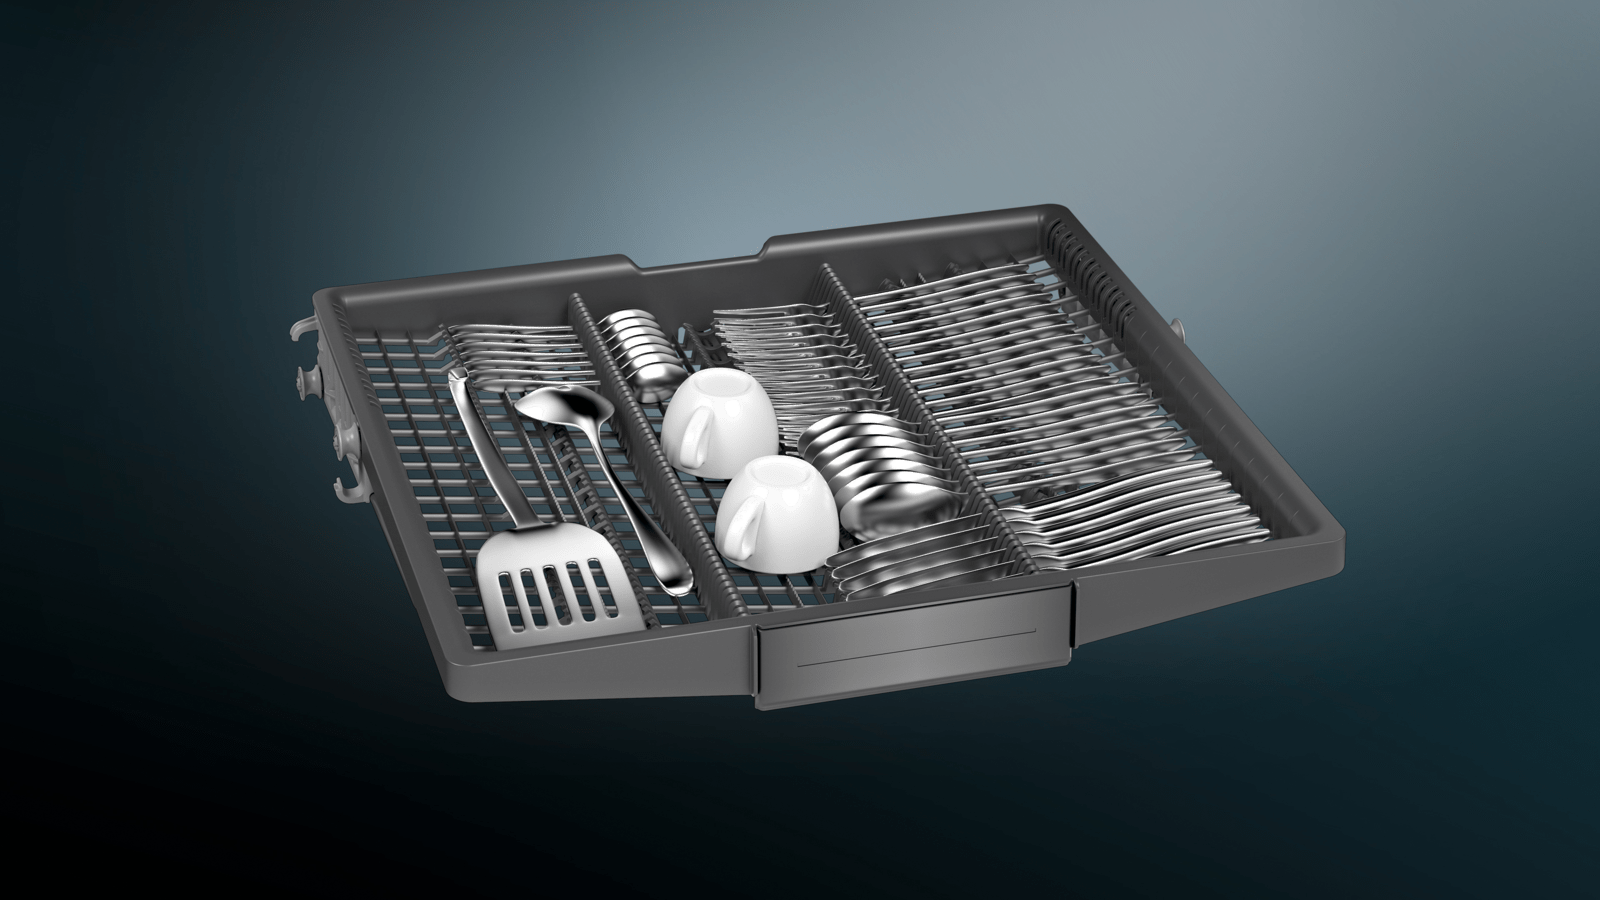 Siemens iQ500 Fully-Integrated Dishwasher SN85TX00CE